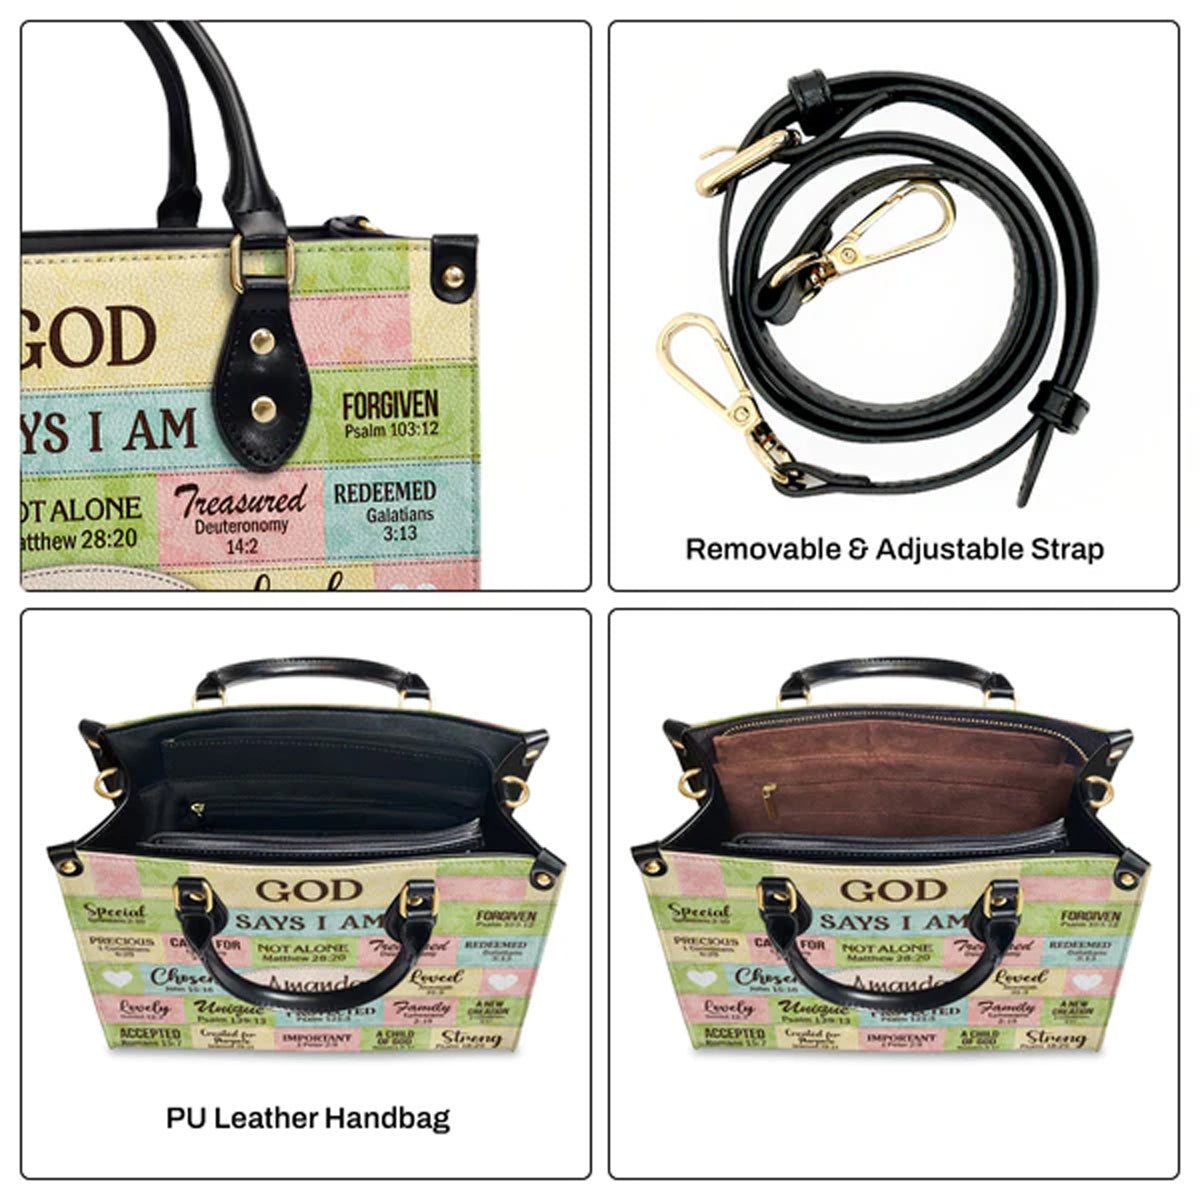 Christianartbag Handbags, God Says I Am Leather Bags, Personalized Bags, Gifts for Women, Christmas Gift, CABLTB02300723. - Christian Art Bag